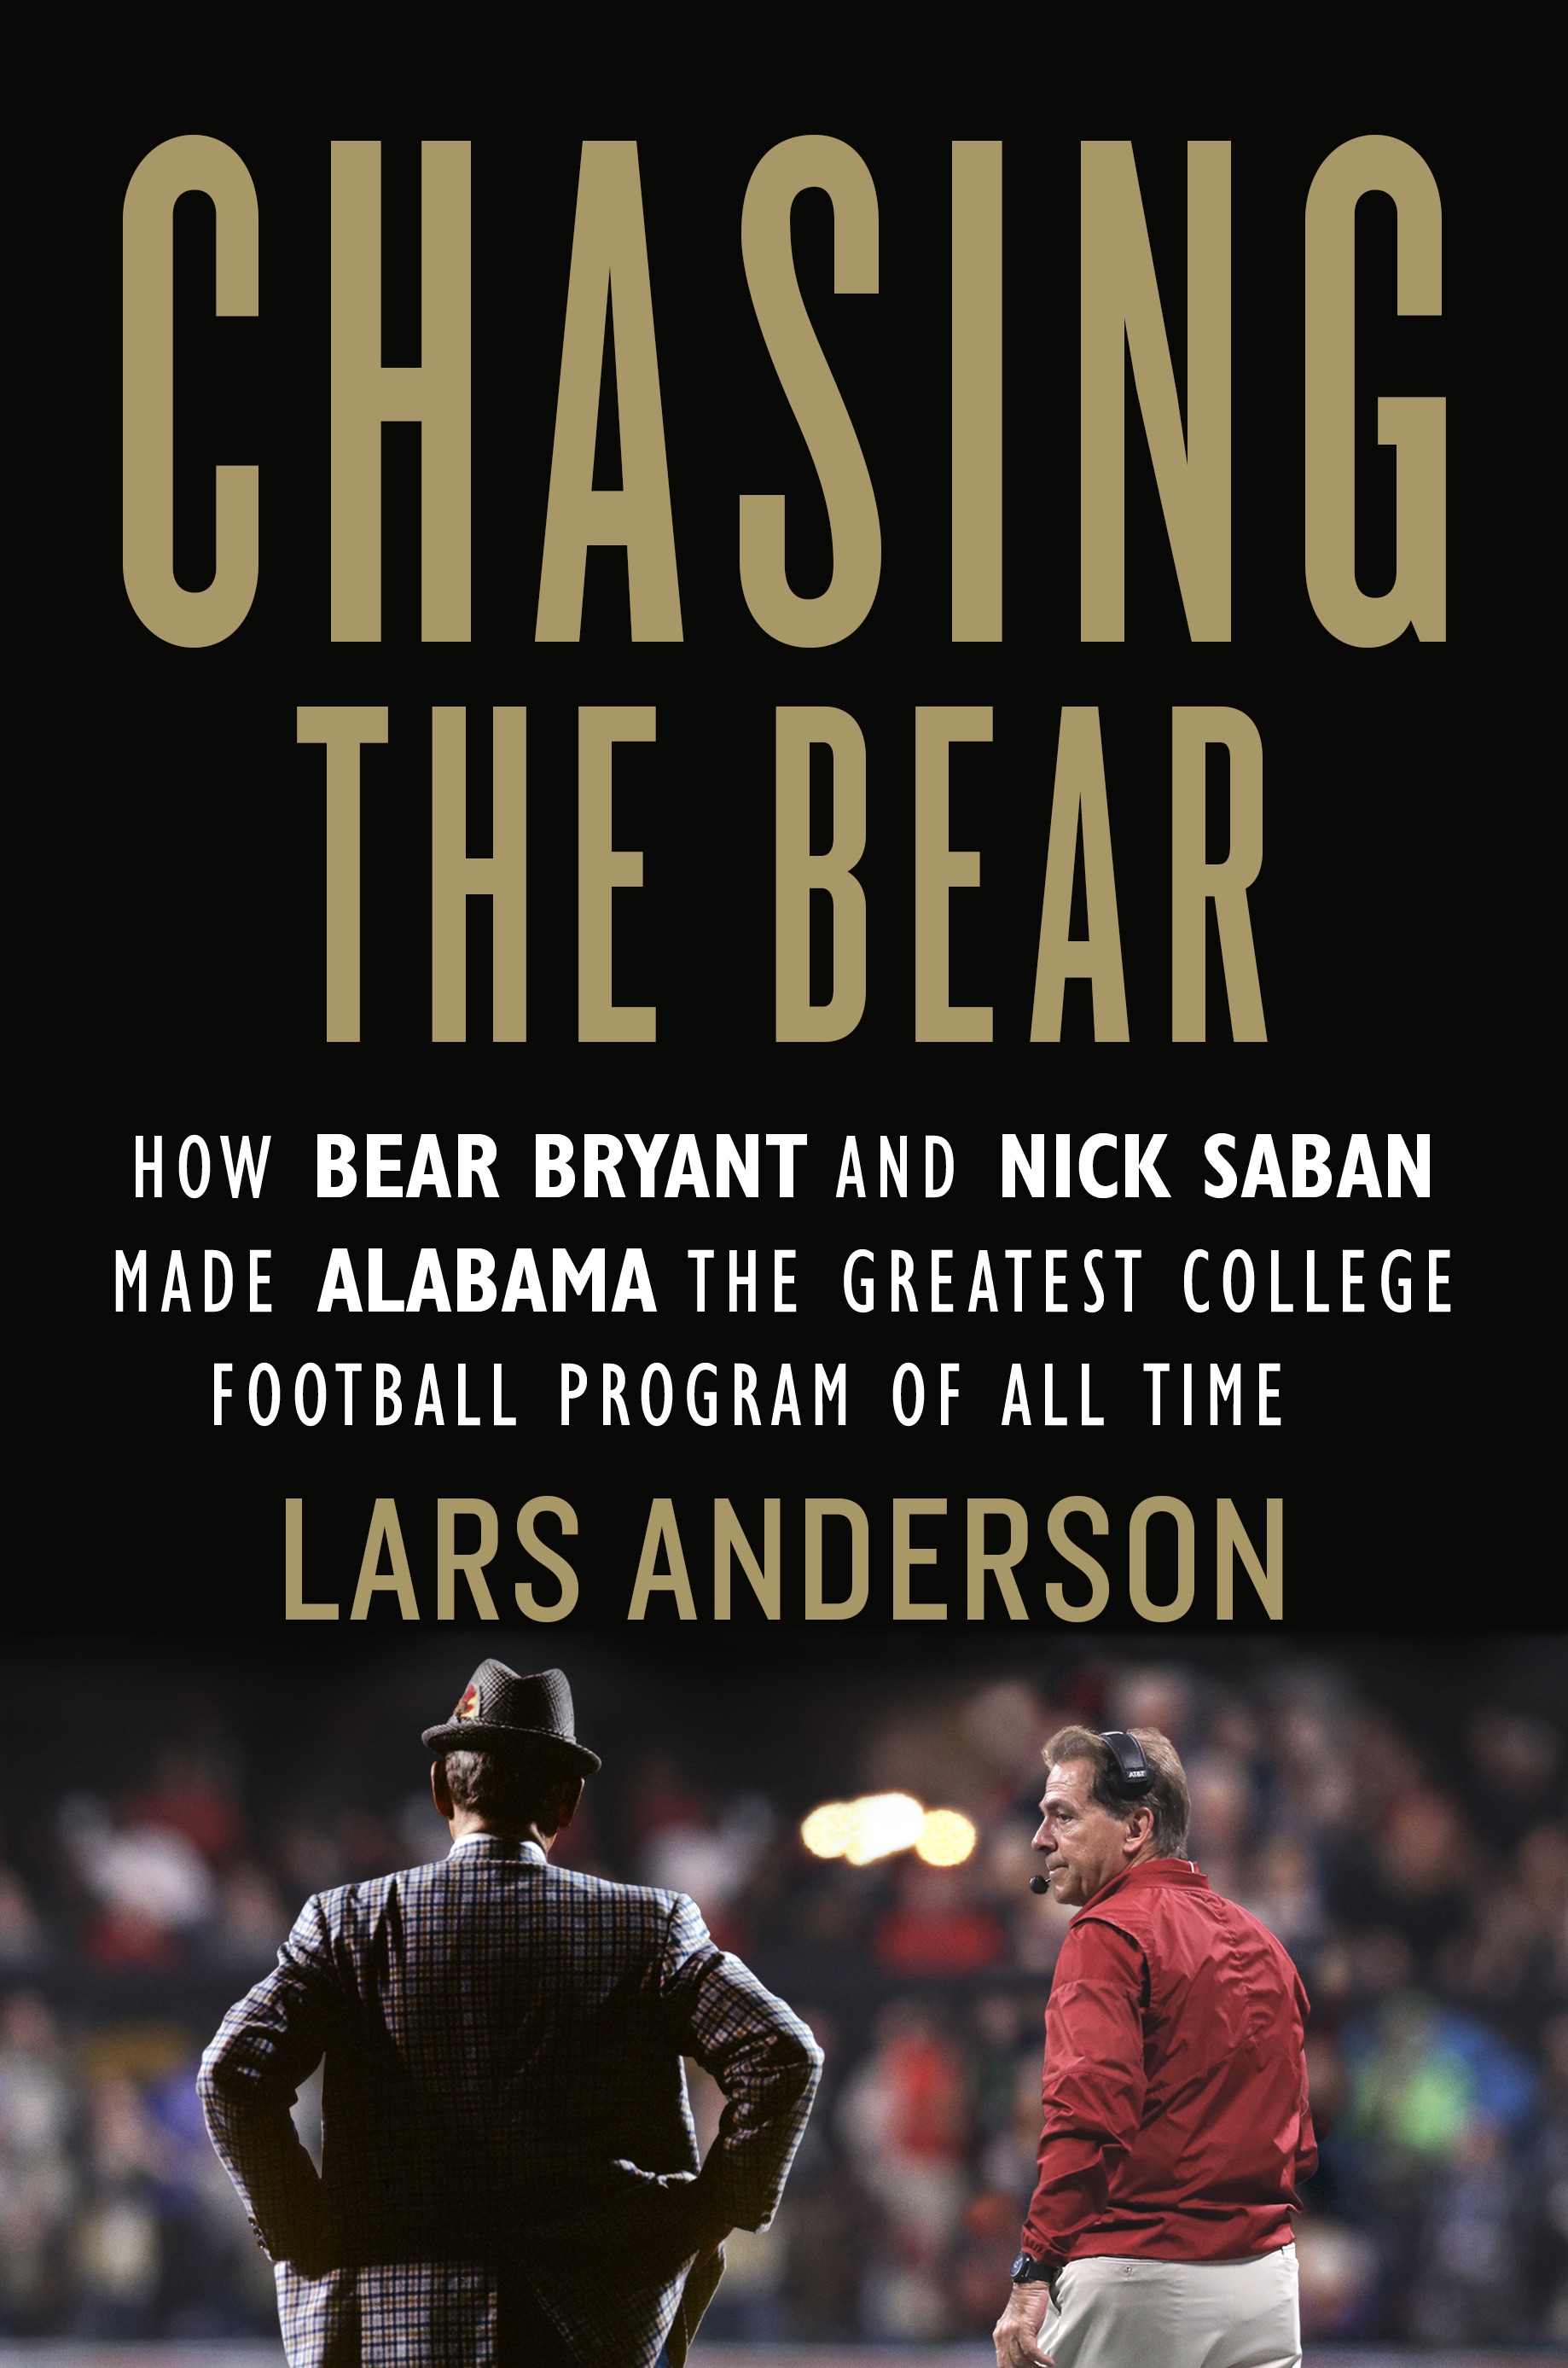 Chasing the Bear by Lars Anderson hit shelves on September 3rd.